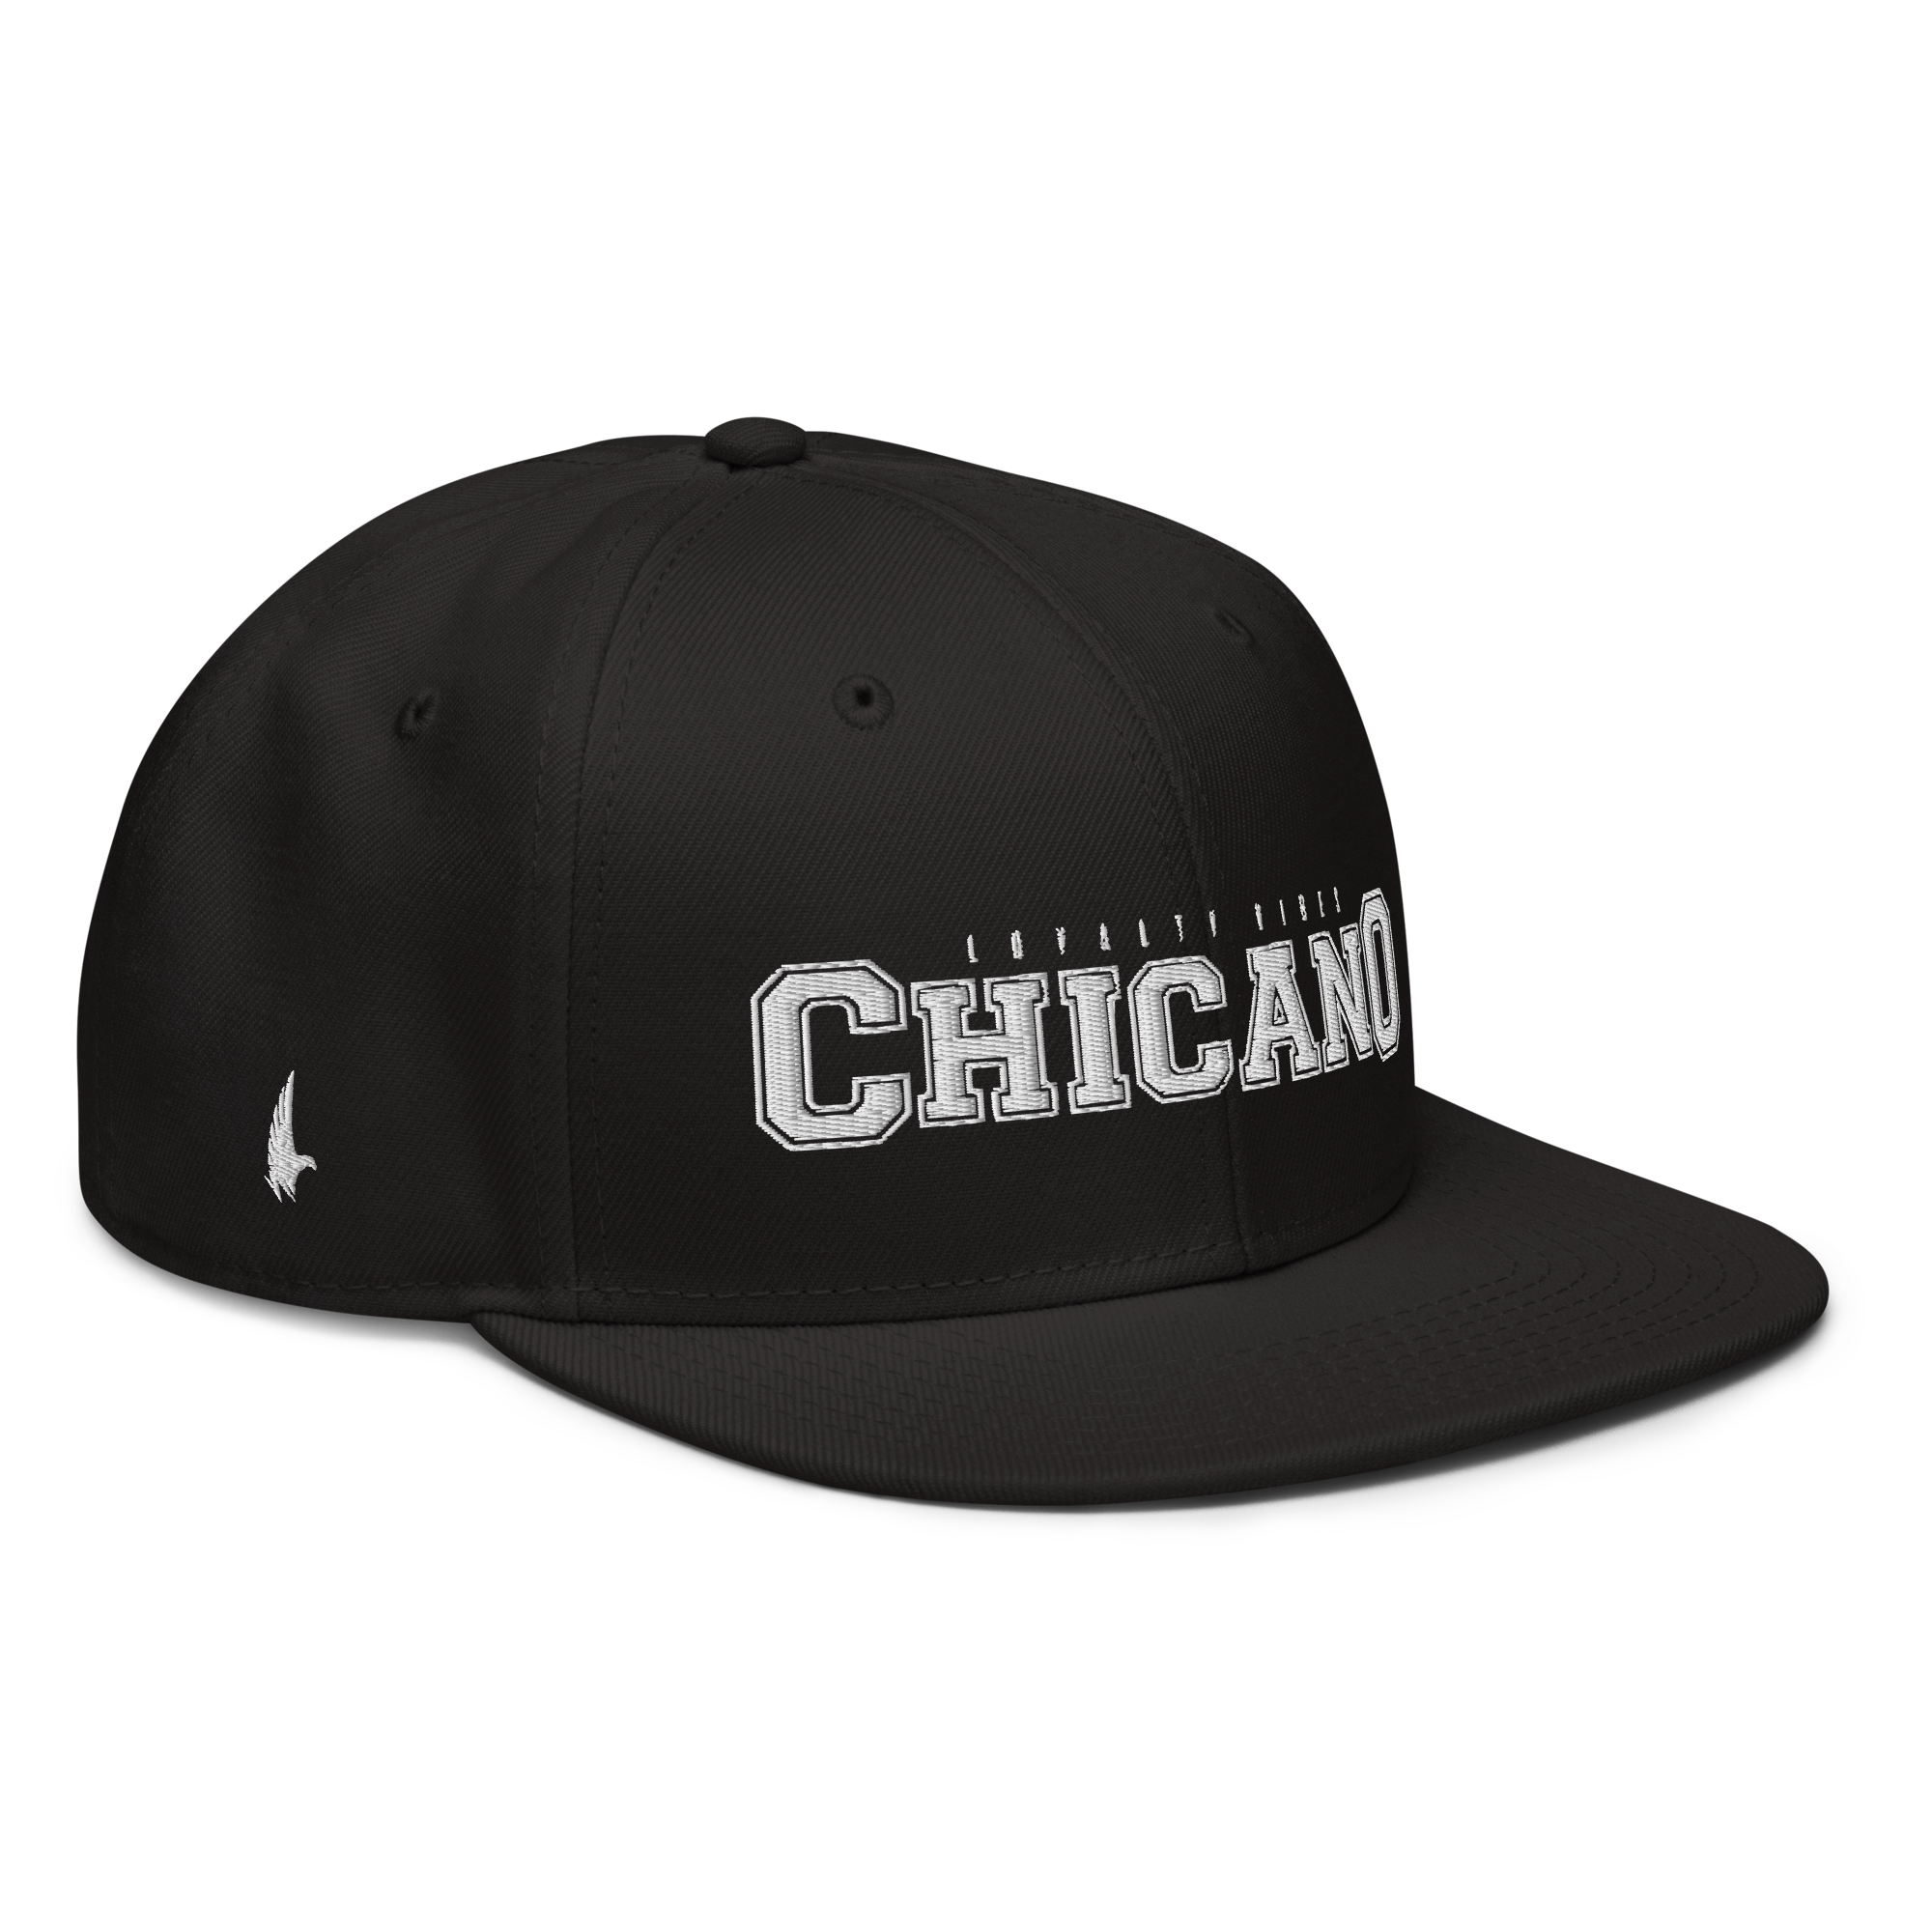 Chicano Snapback Hat Black OS - Loyalty Vibes